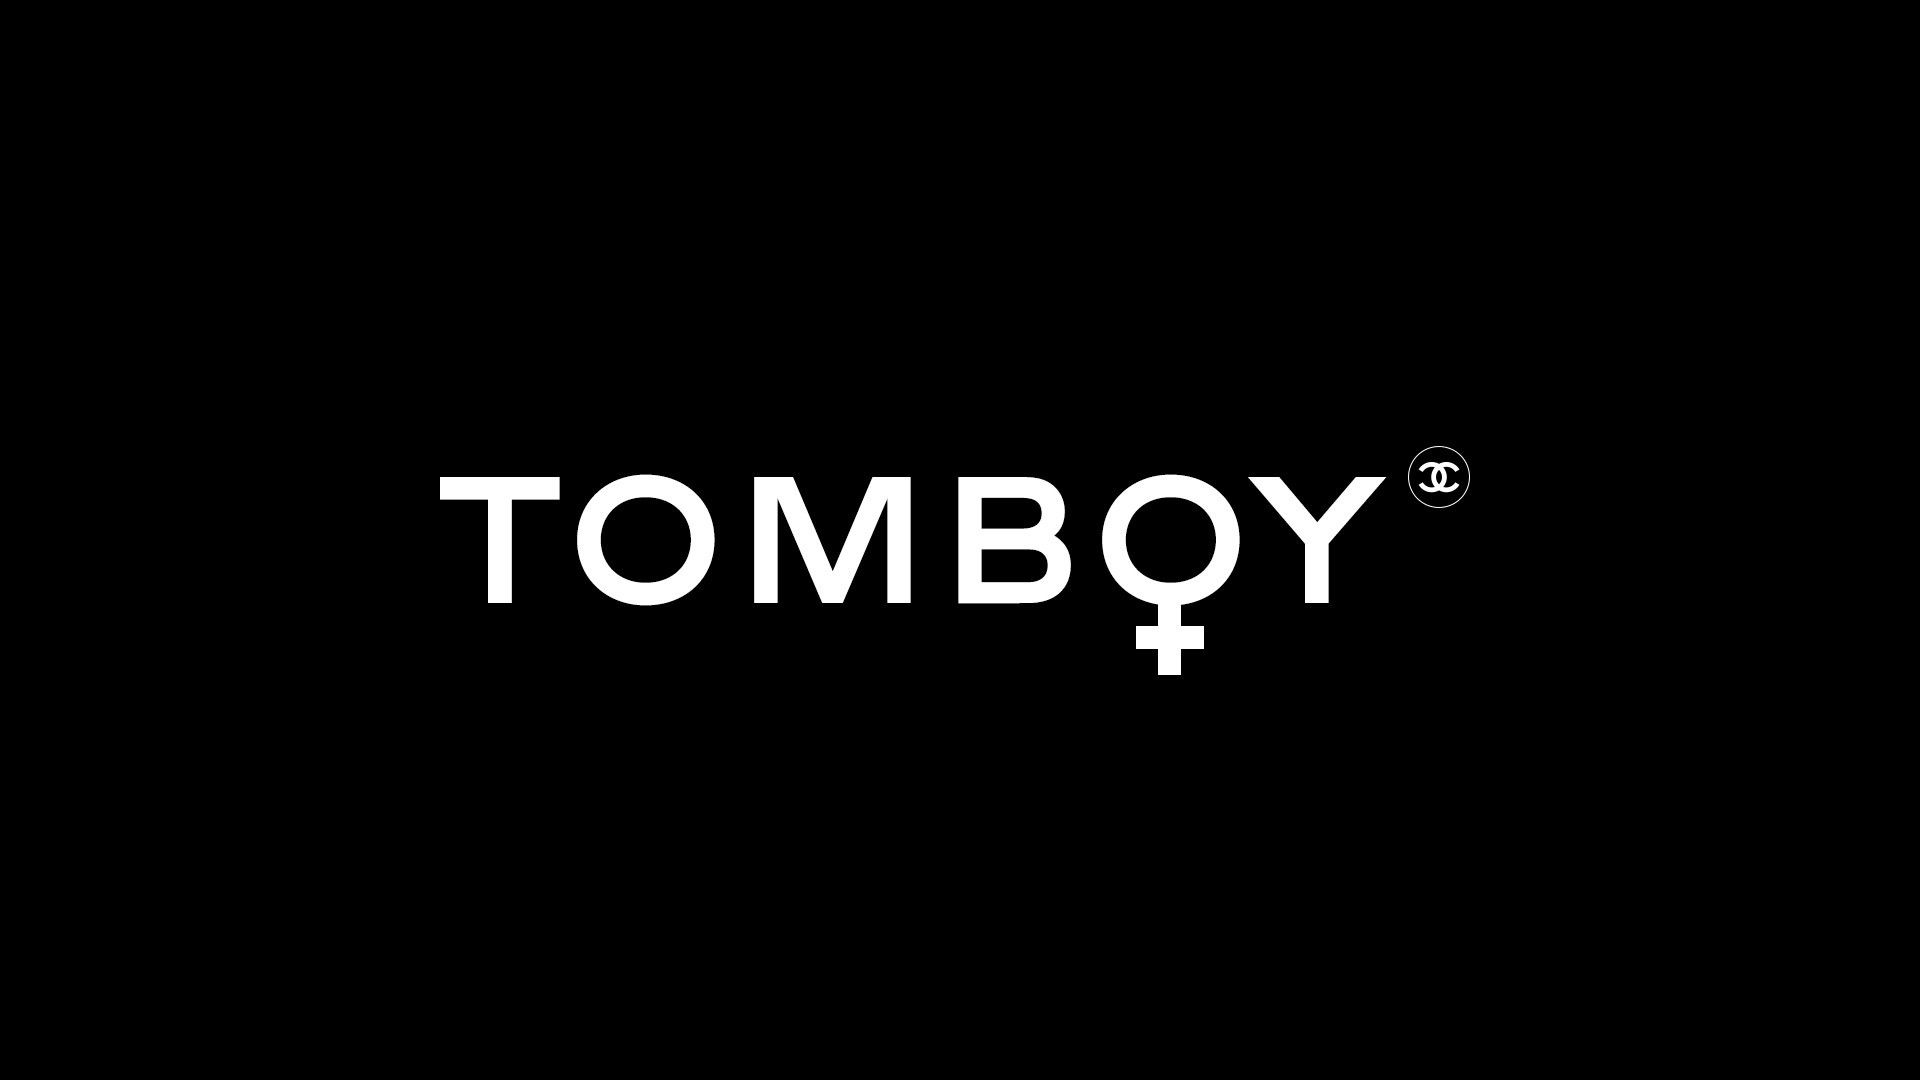 Tomboy HD Wallpaper - KoLPaPer - Awesome Free HD Wallpapers